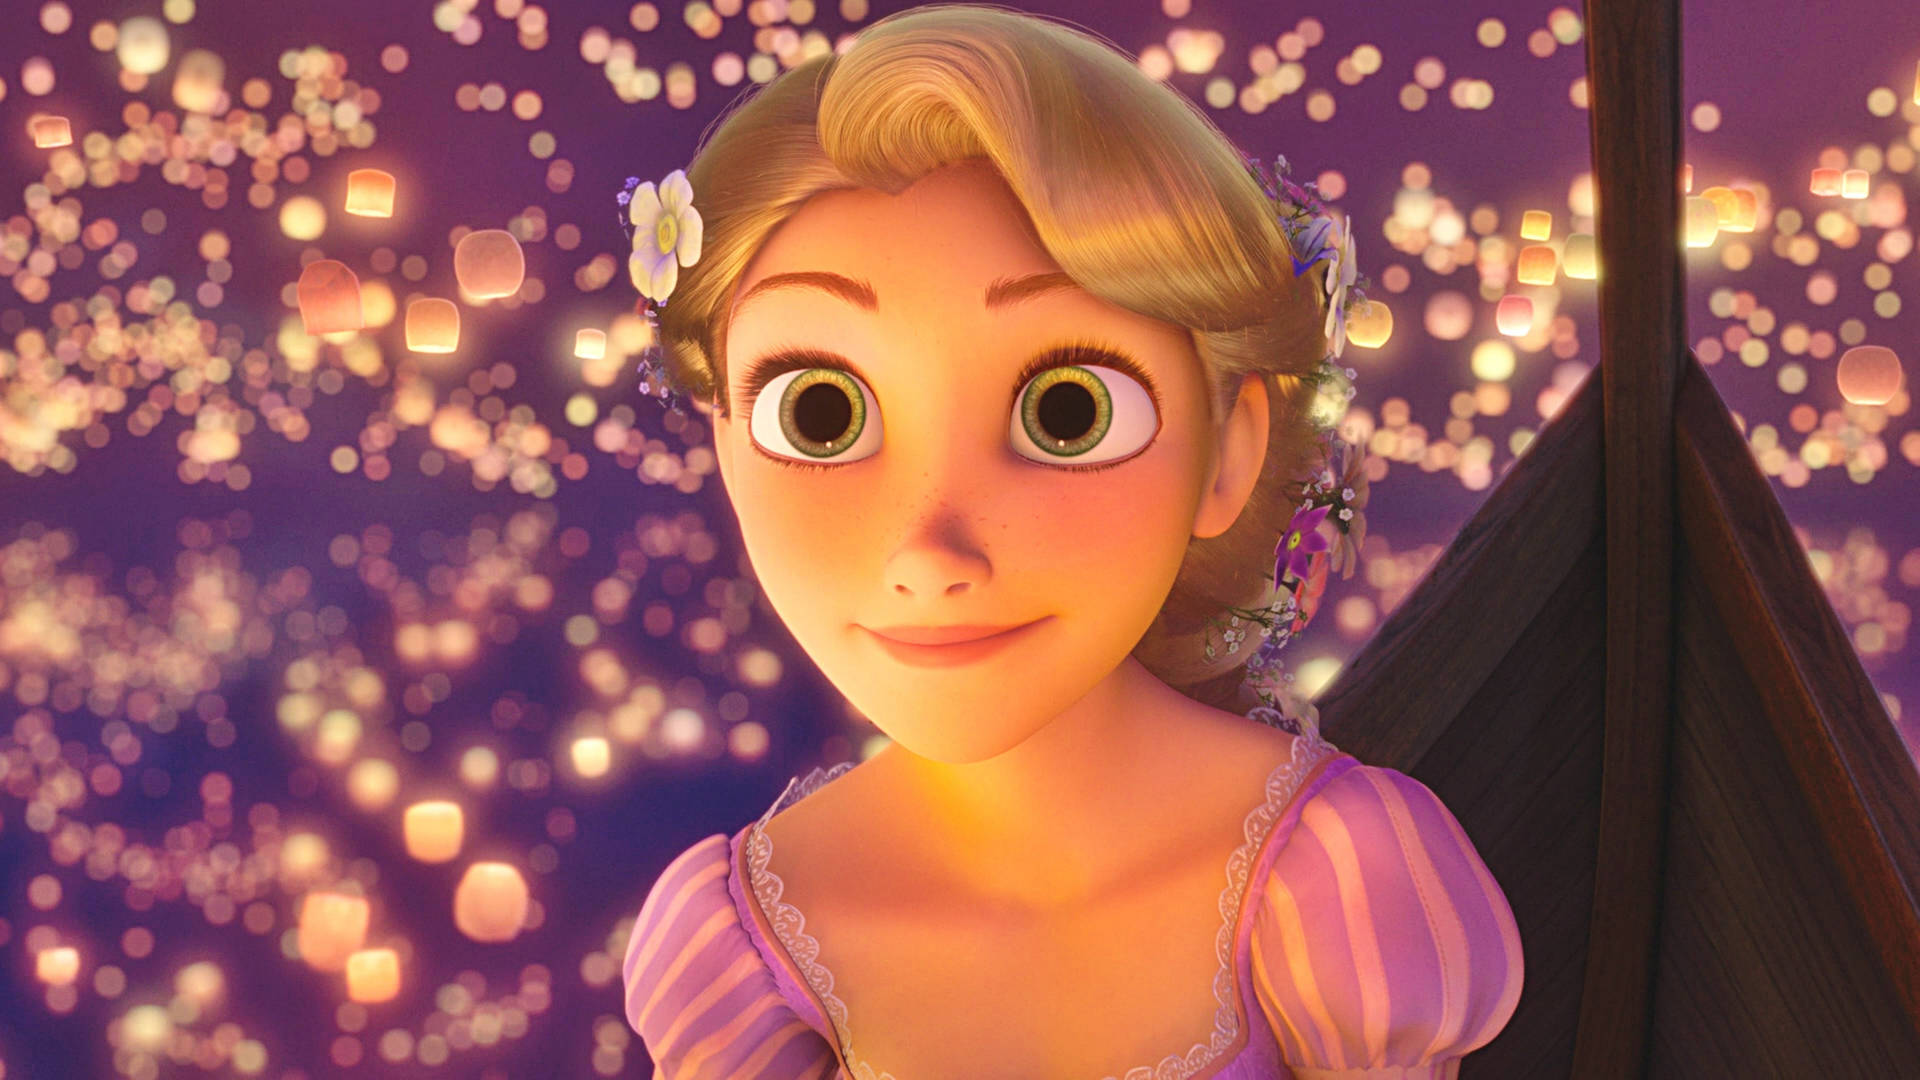 Disney Princess Rapunzel With Lanterns Wallpaper